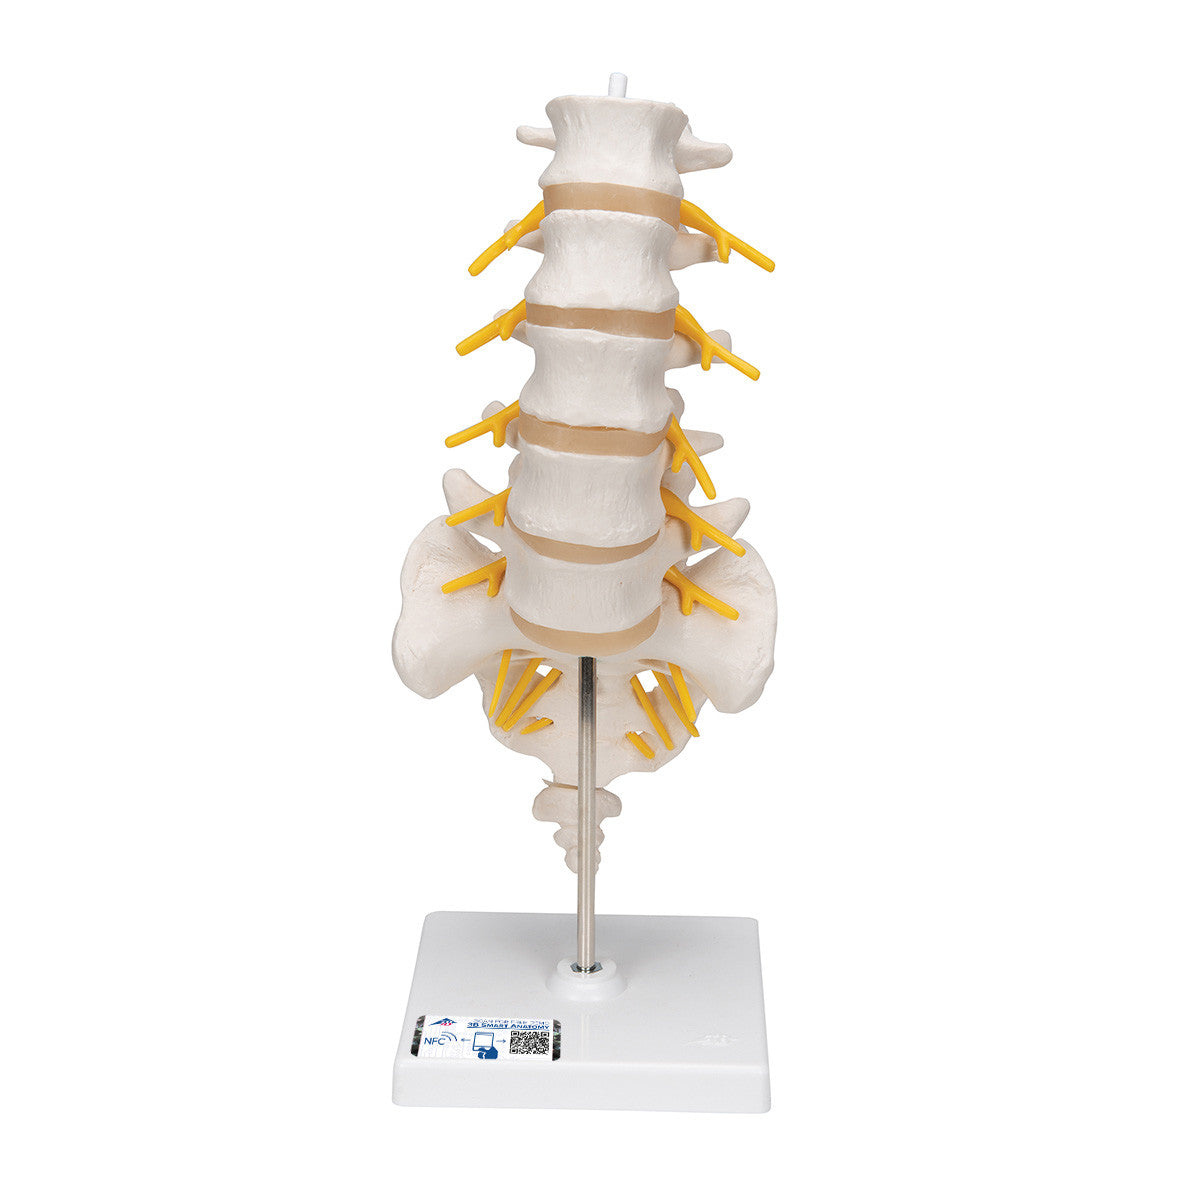 a74_01_1200_1200_lumbar-human-spinal-column-model-3b-smart-anatomy__89483.1589752909.1280.1280.jpg